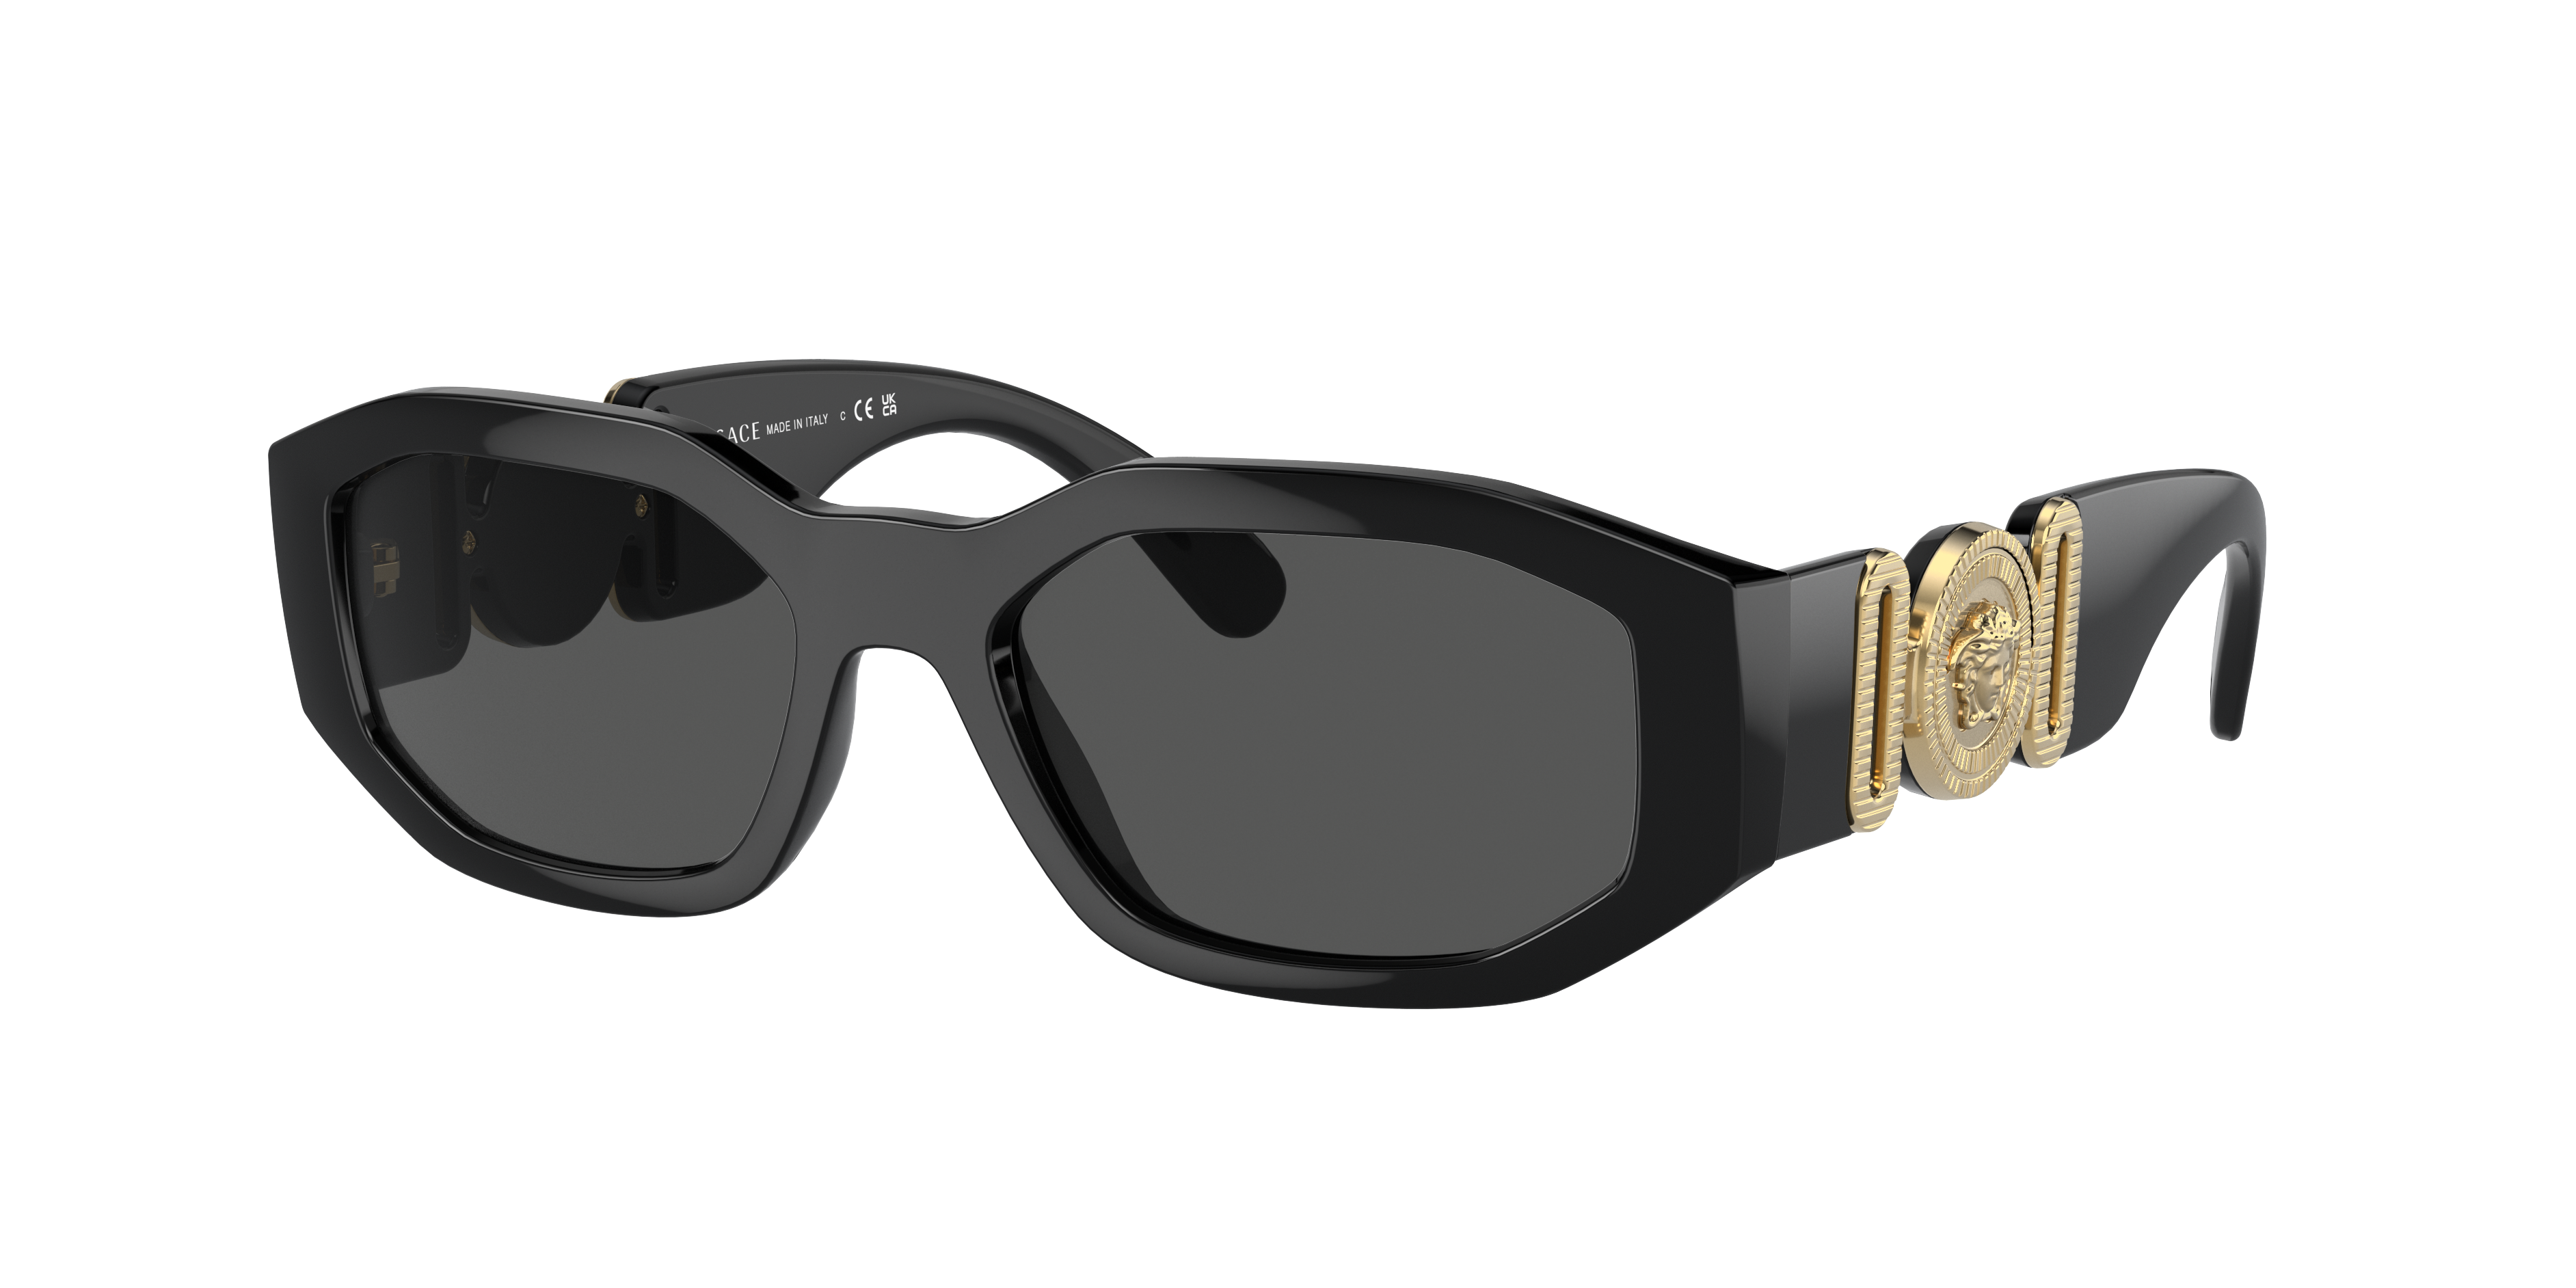 Michael Kors MK2137U Womens Anaheim Polarised Square Sunglasses  BlackGrey Gradient at John Lewis  Partners